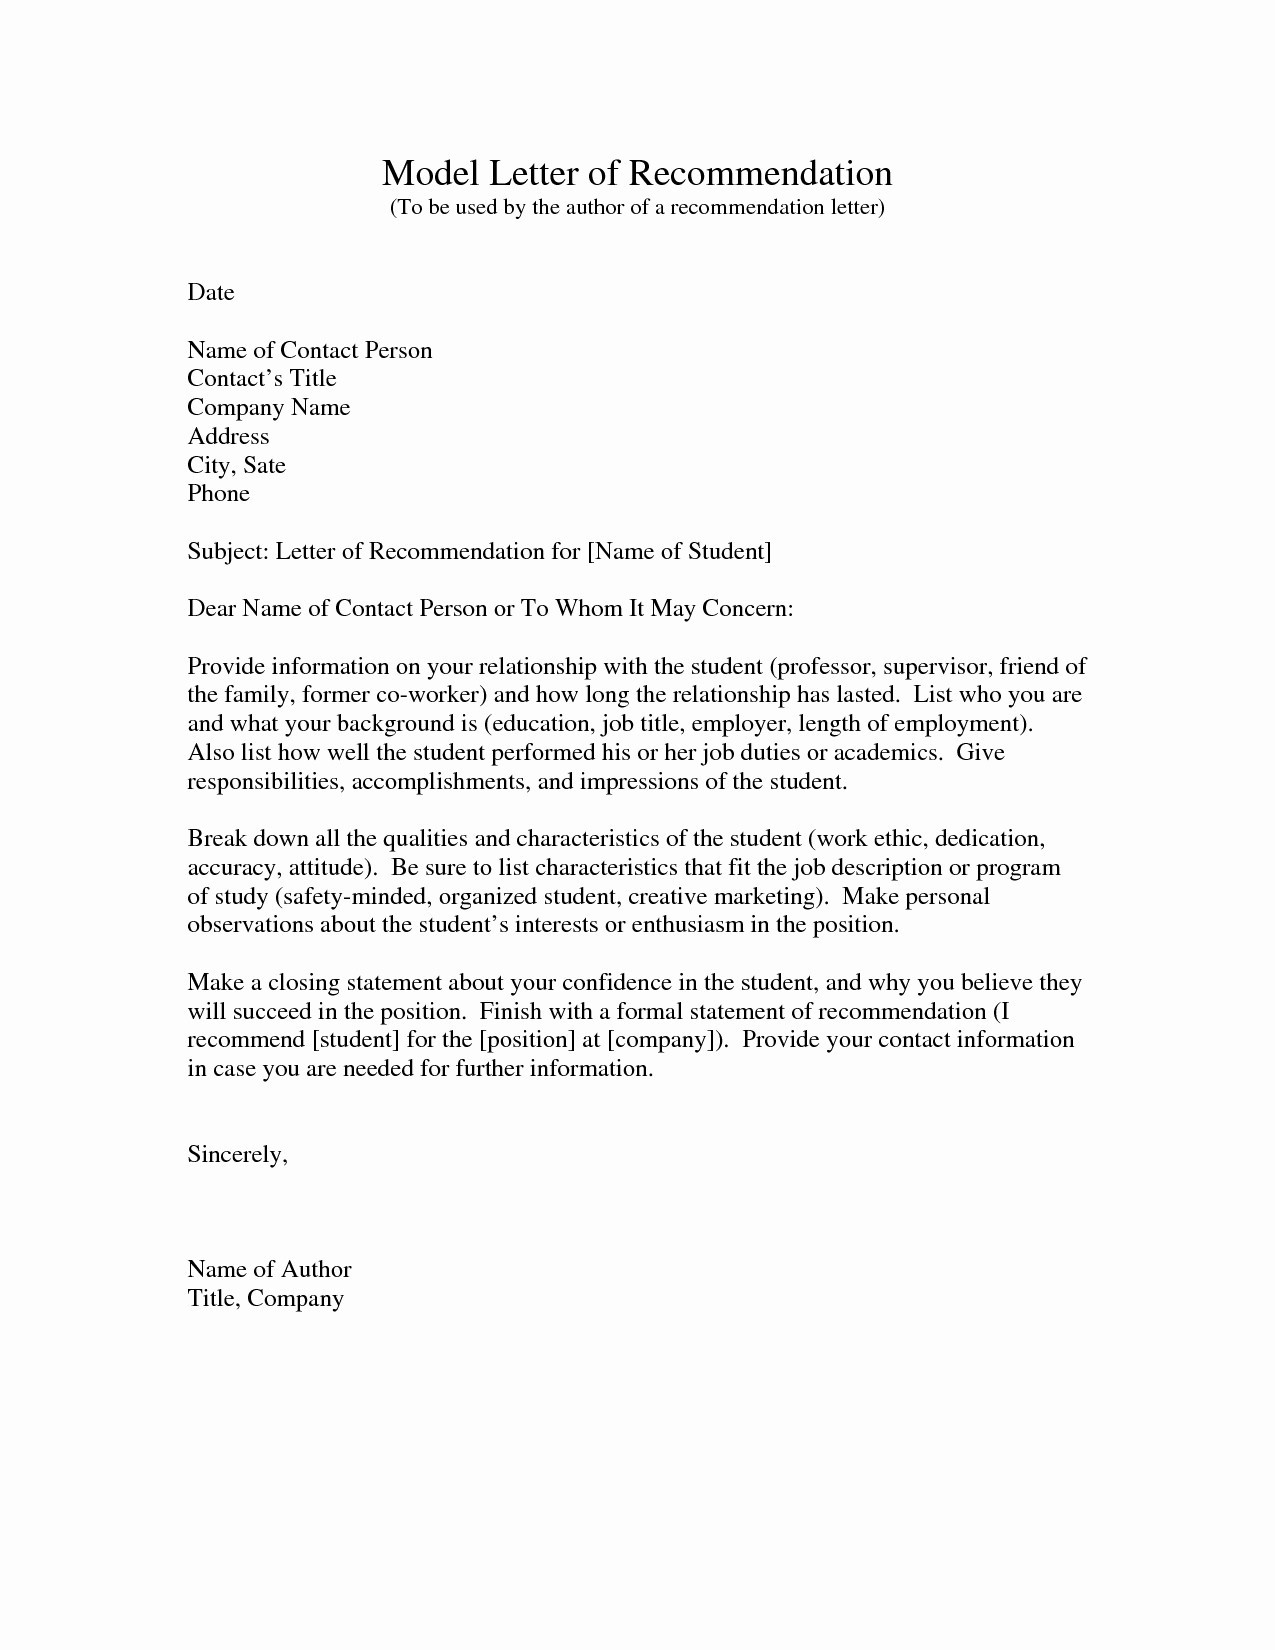 Letter Of Recommendation Closing Statement Debandje inside size 1275 X 1650